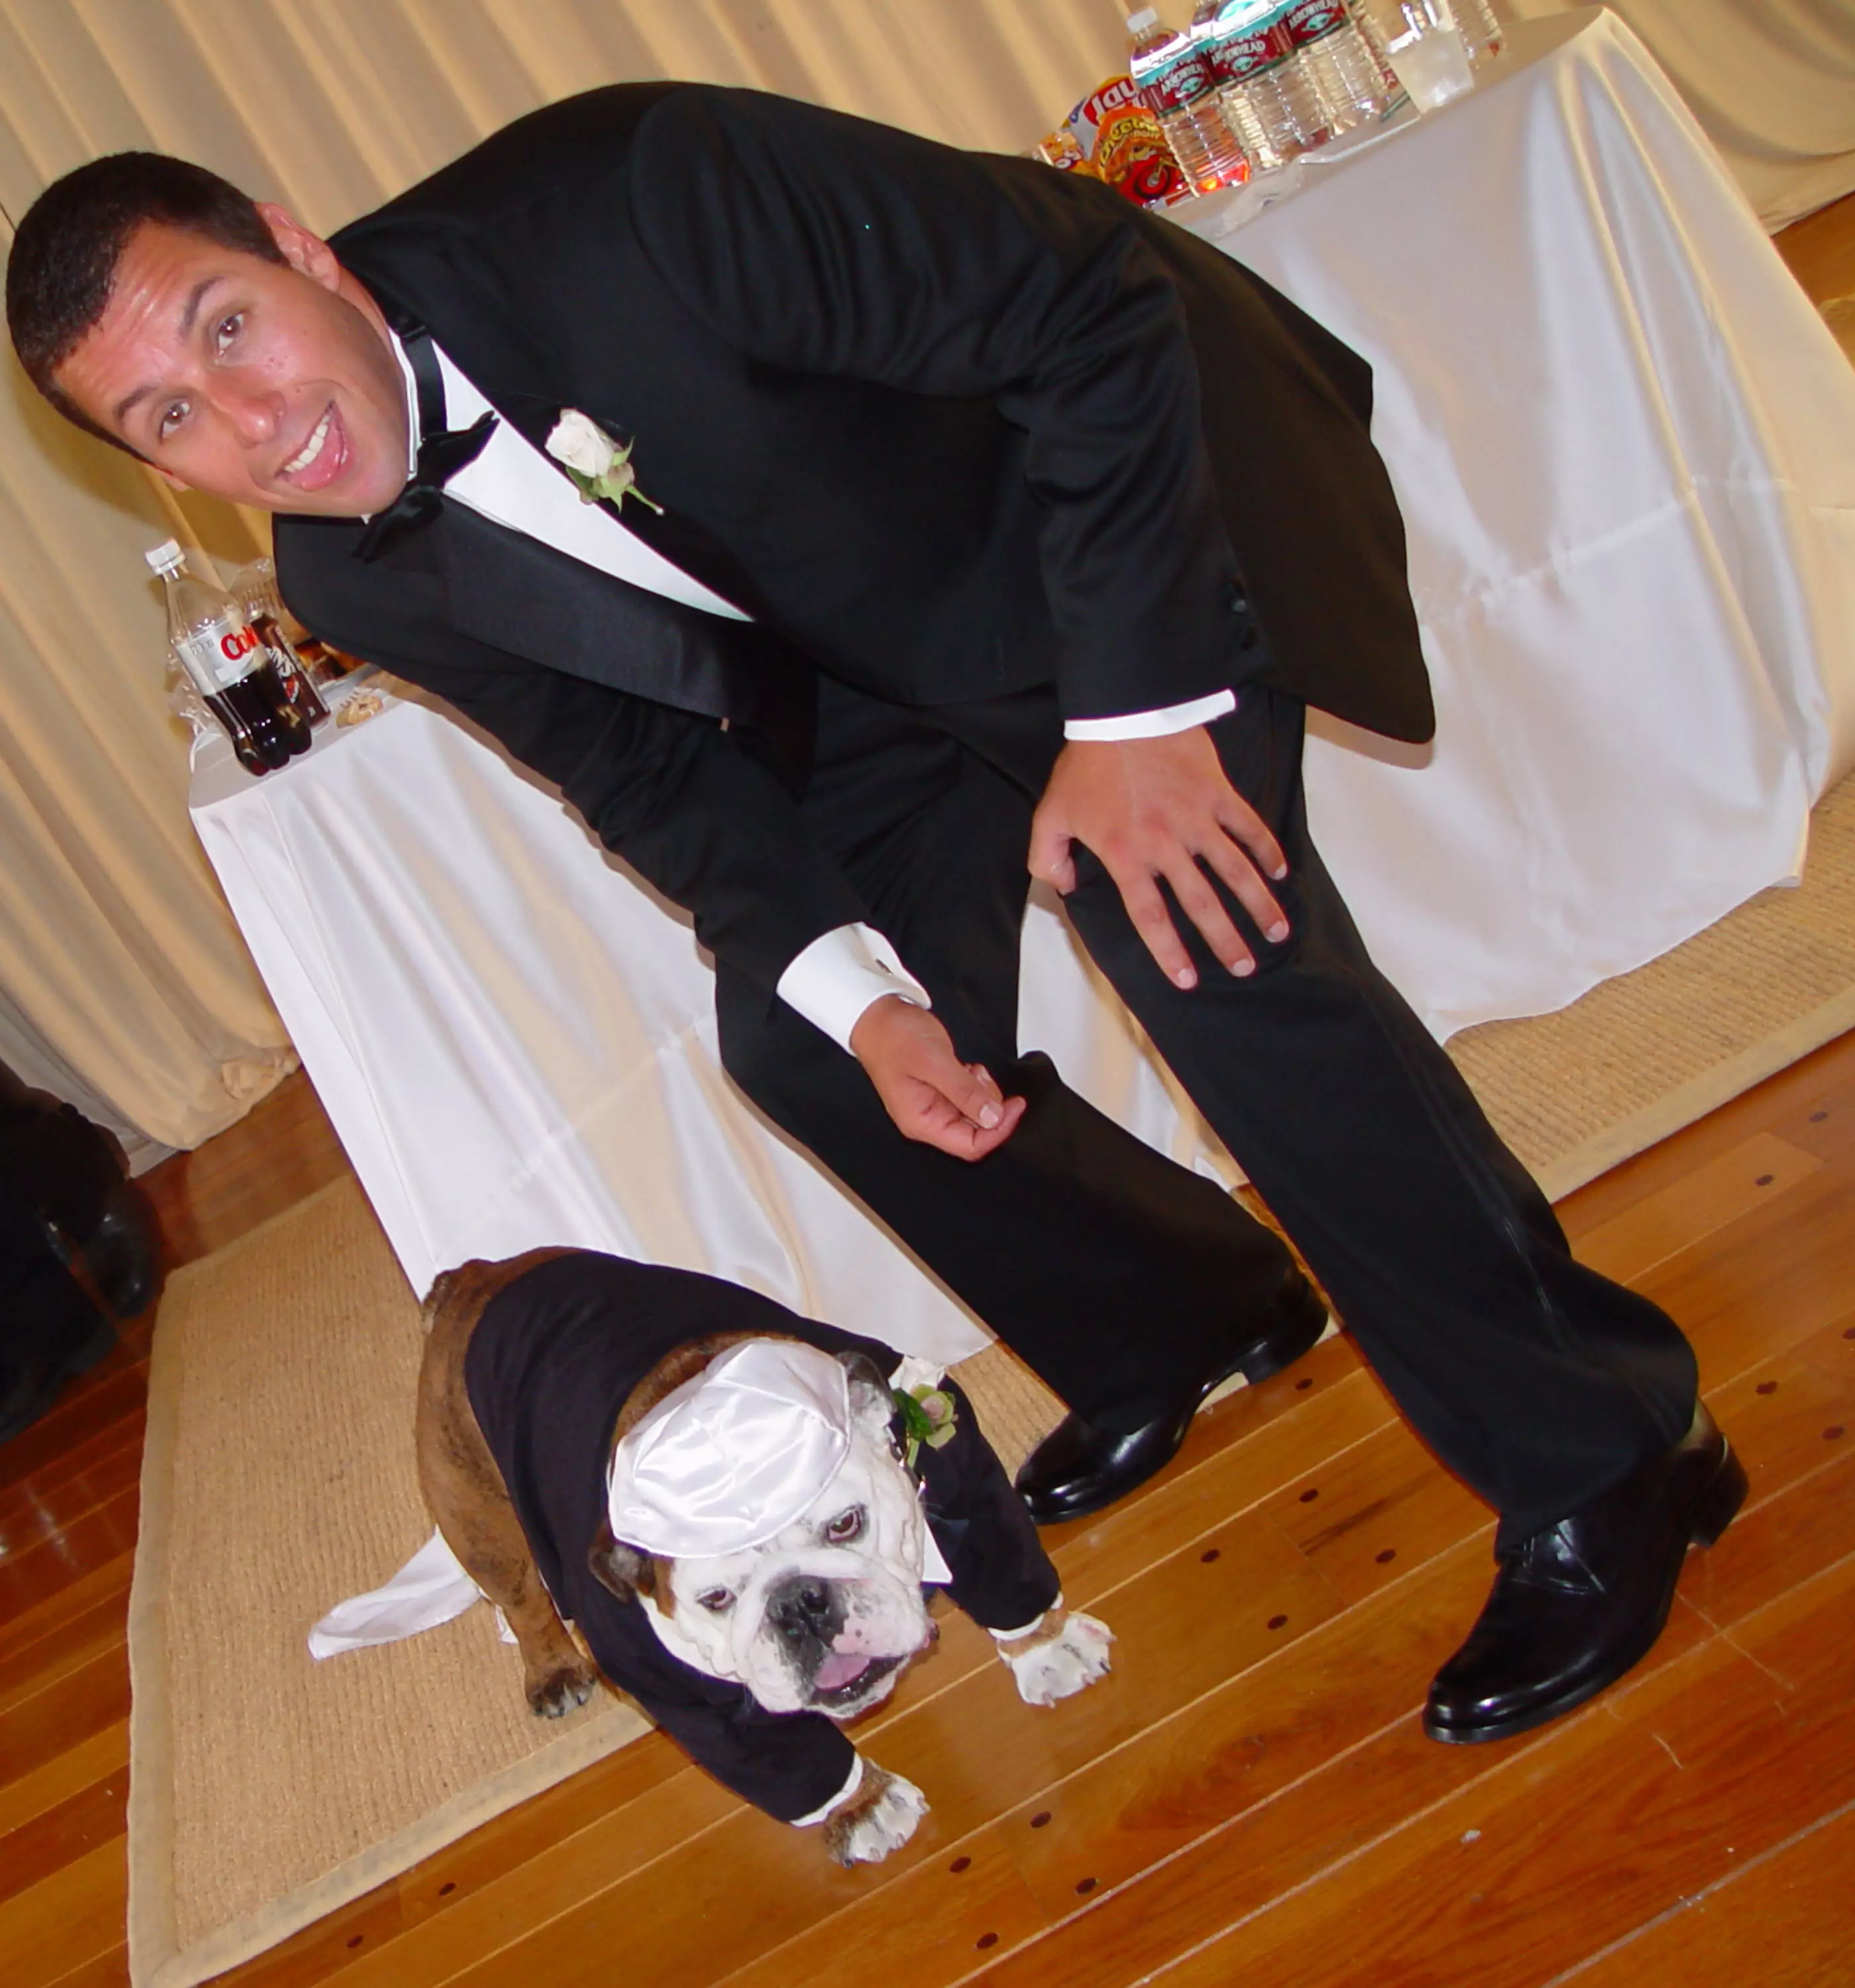 Meatball was Adam Sandler's best man at his wedding in 2003.